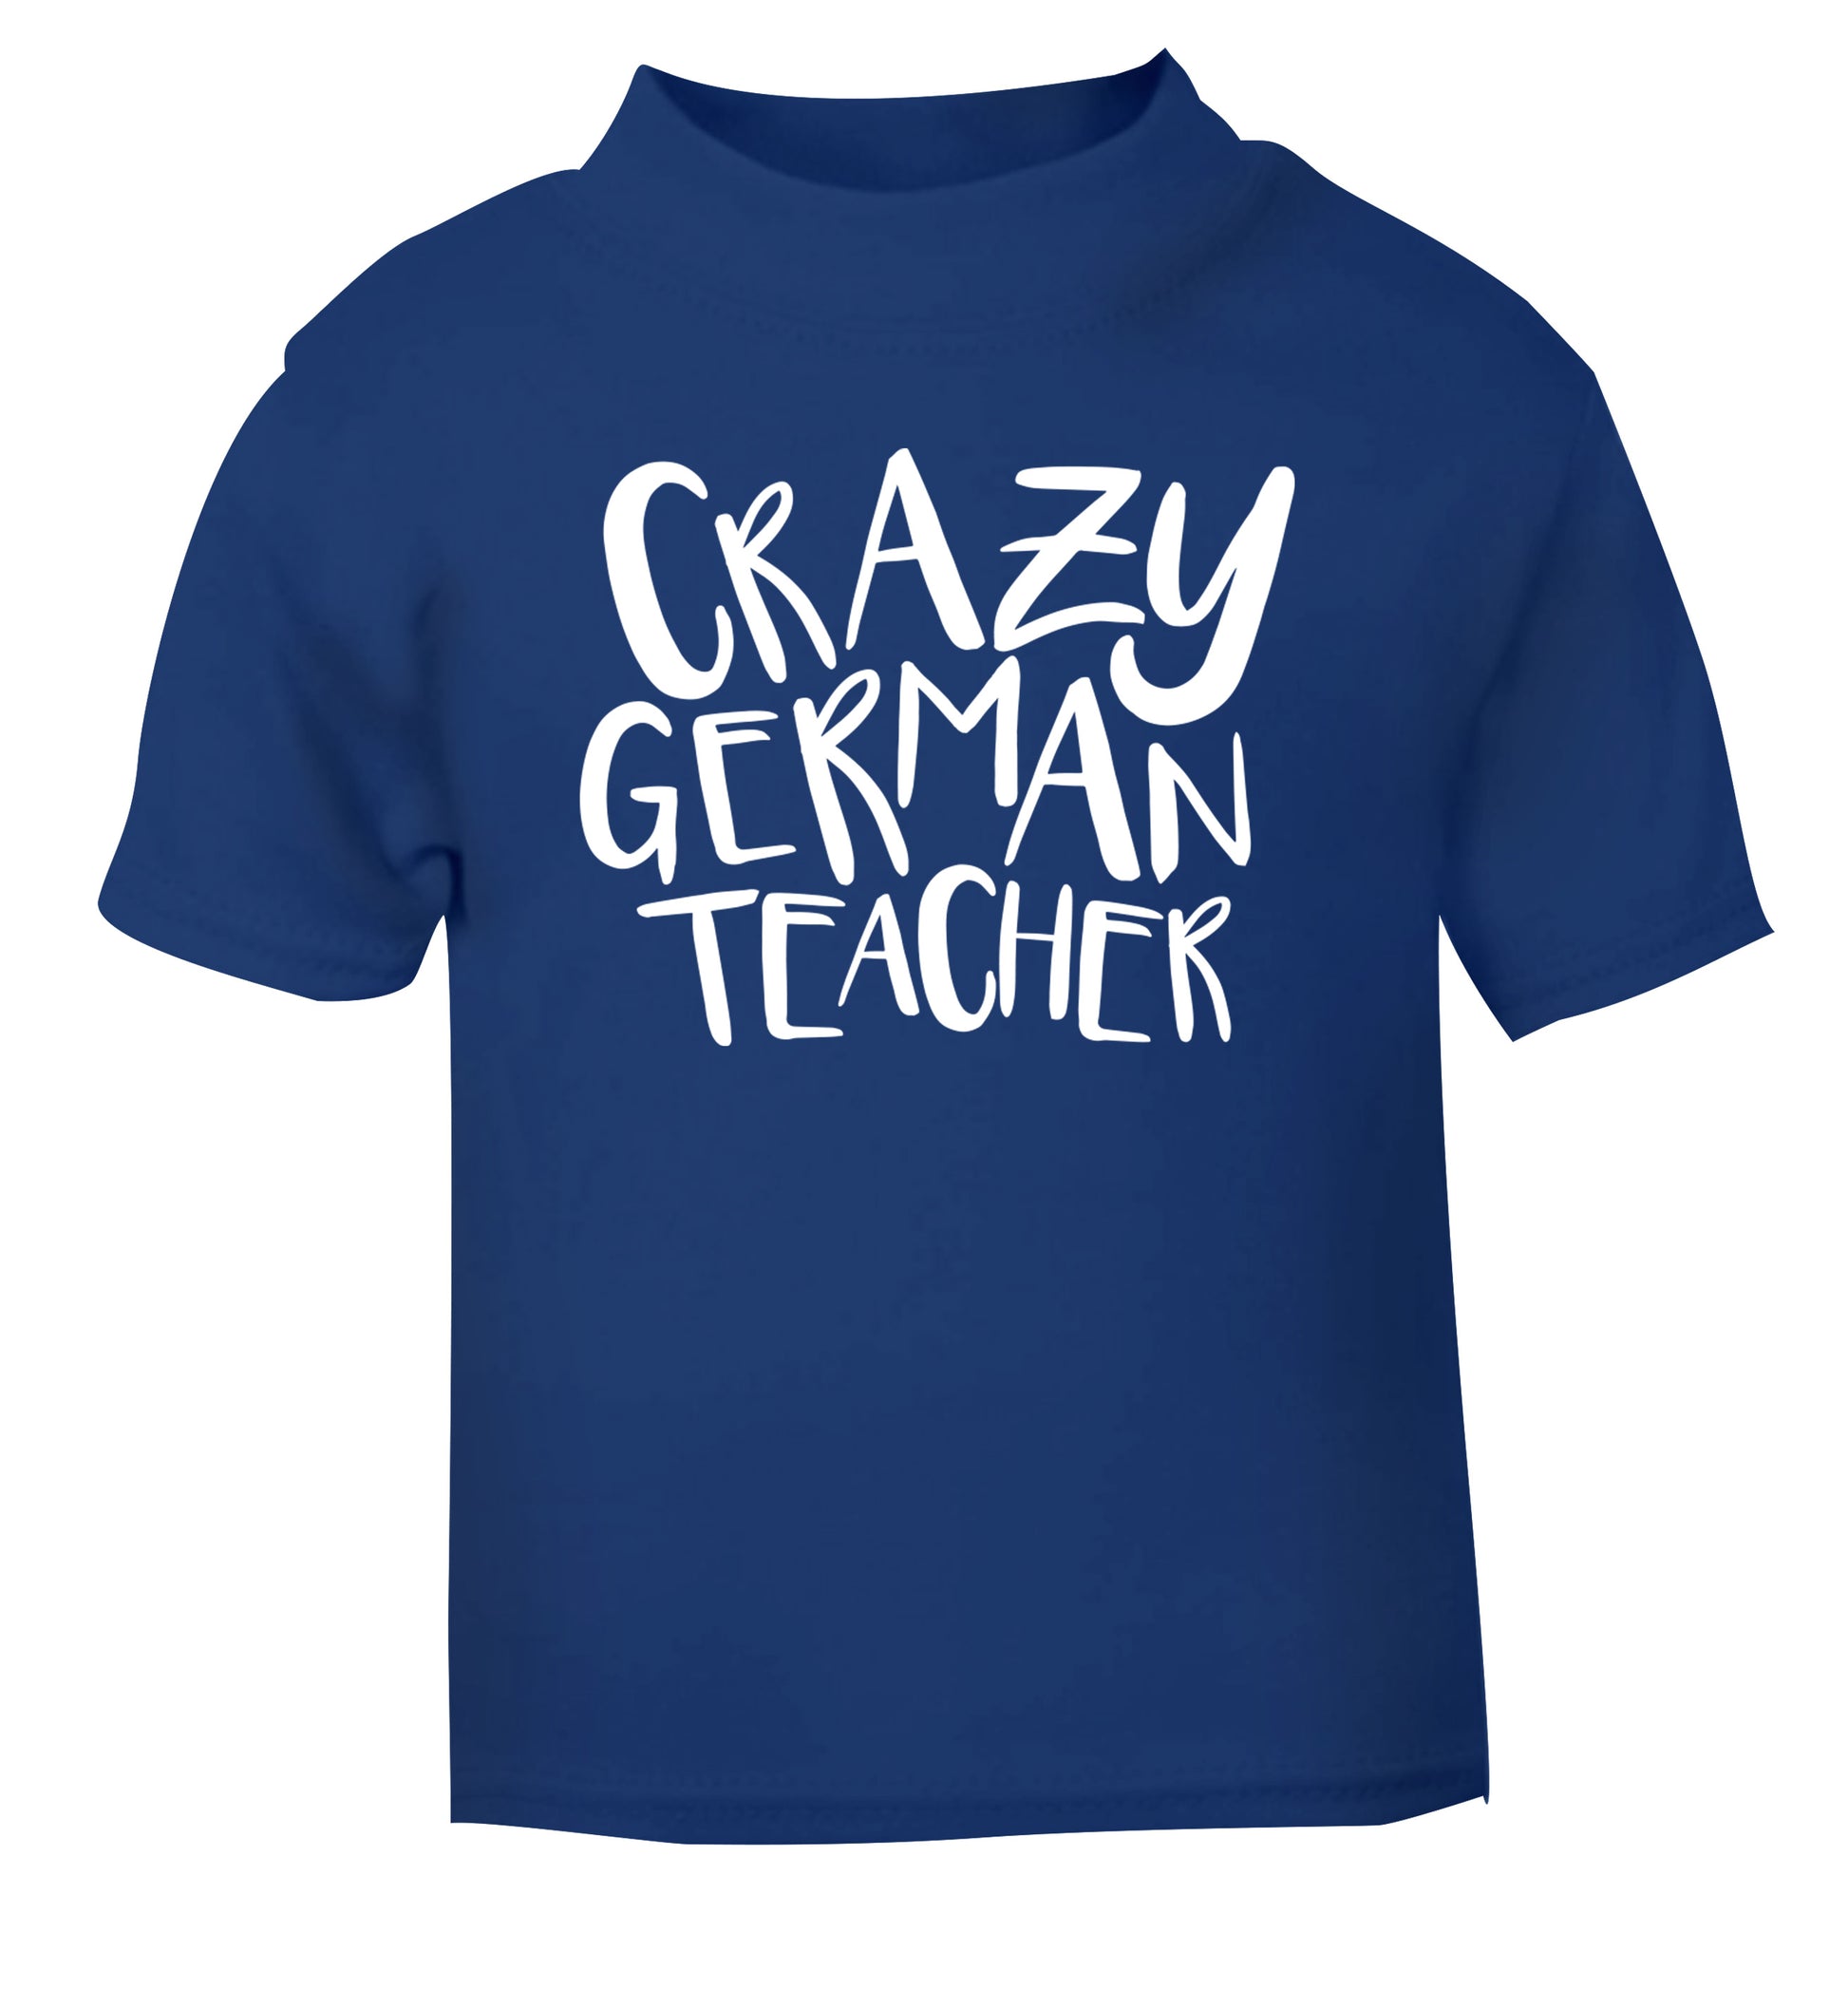 Crazy german teacher blue Baby Toddler Tshirt 2 Years